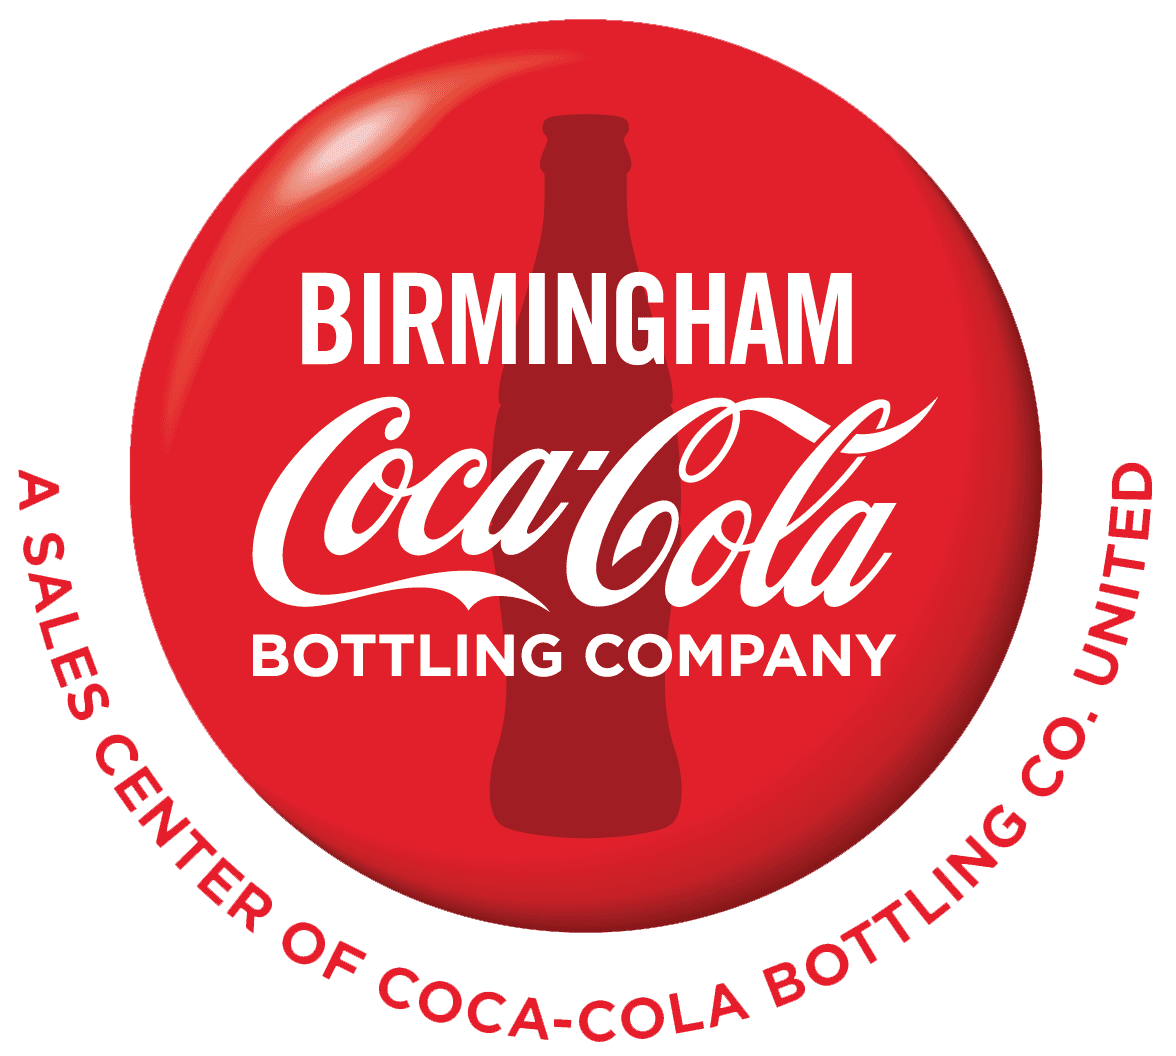 Coca-Cola bottling company of birmingham